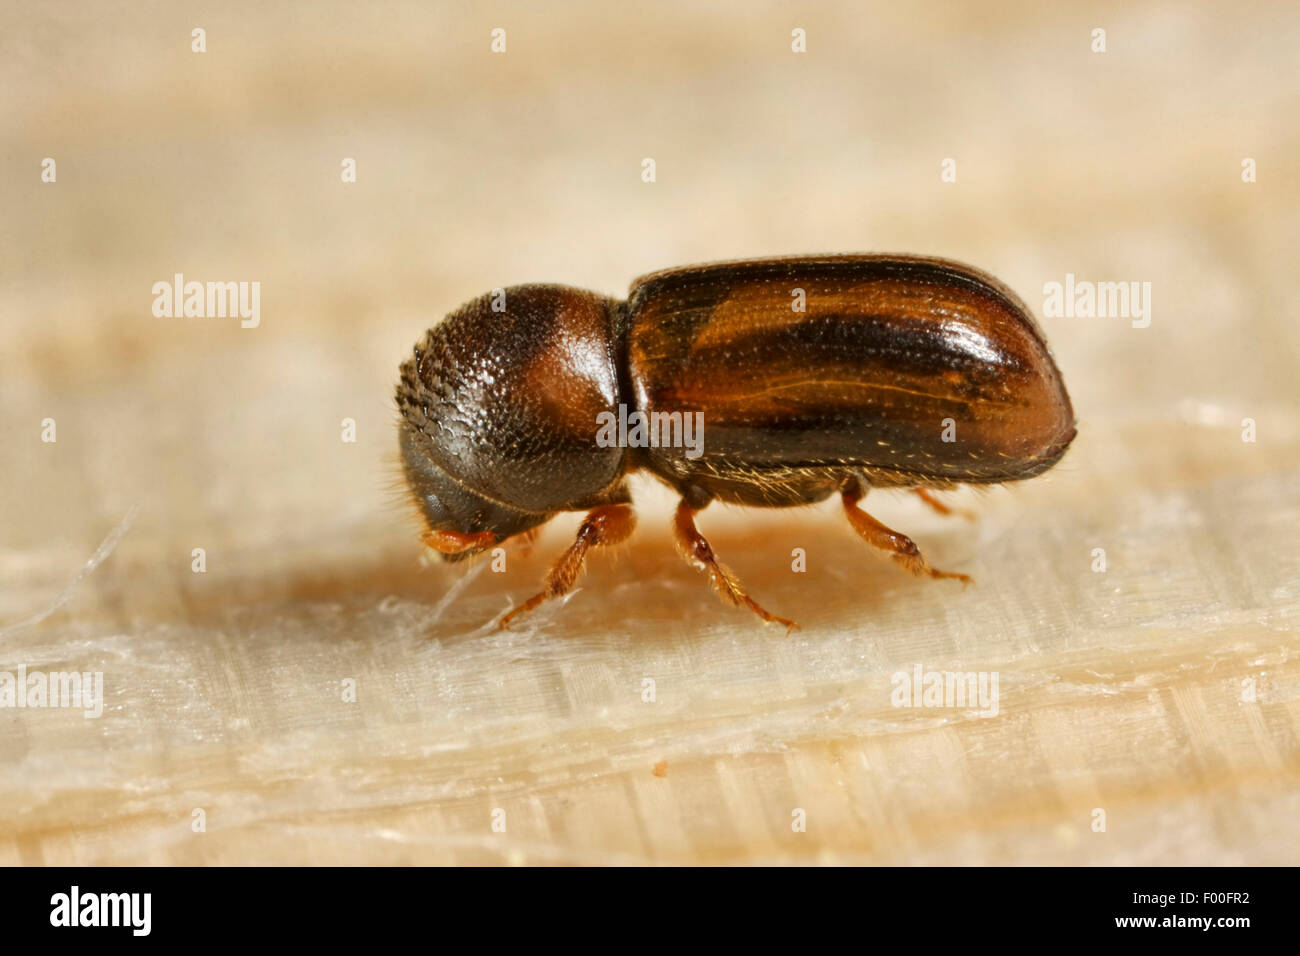 Striped ambrosia beetle, Spruce timber beetle, Bark beetle (Trypodendron lineatum, Xyleborus lineatus, Xyloterus lineatus), on wood, Germany Stock Photo